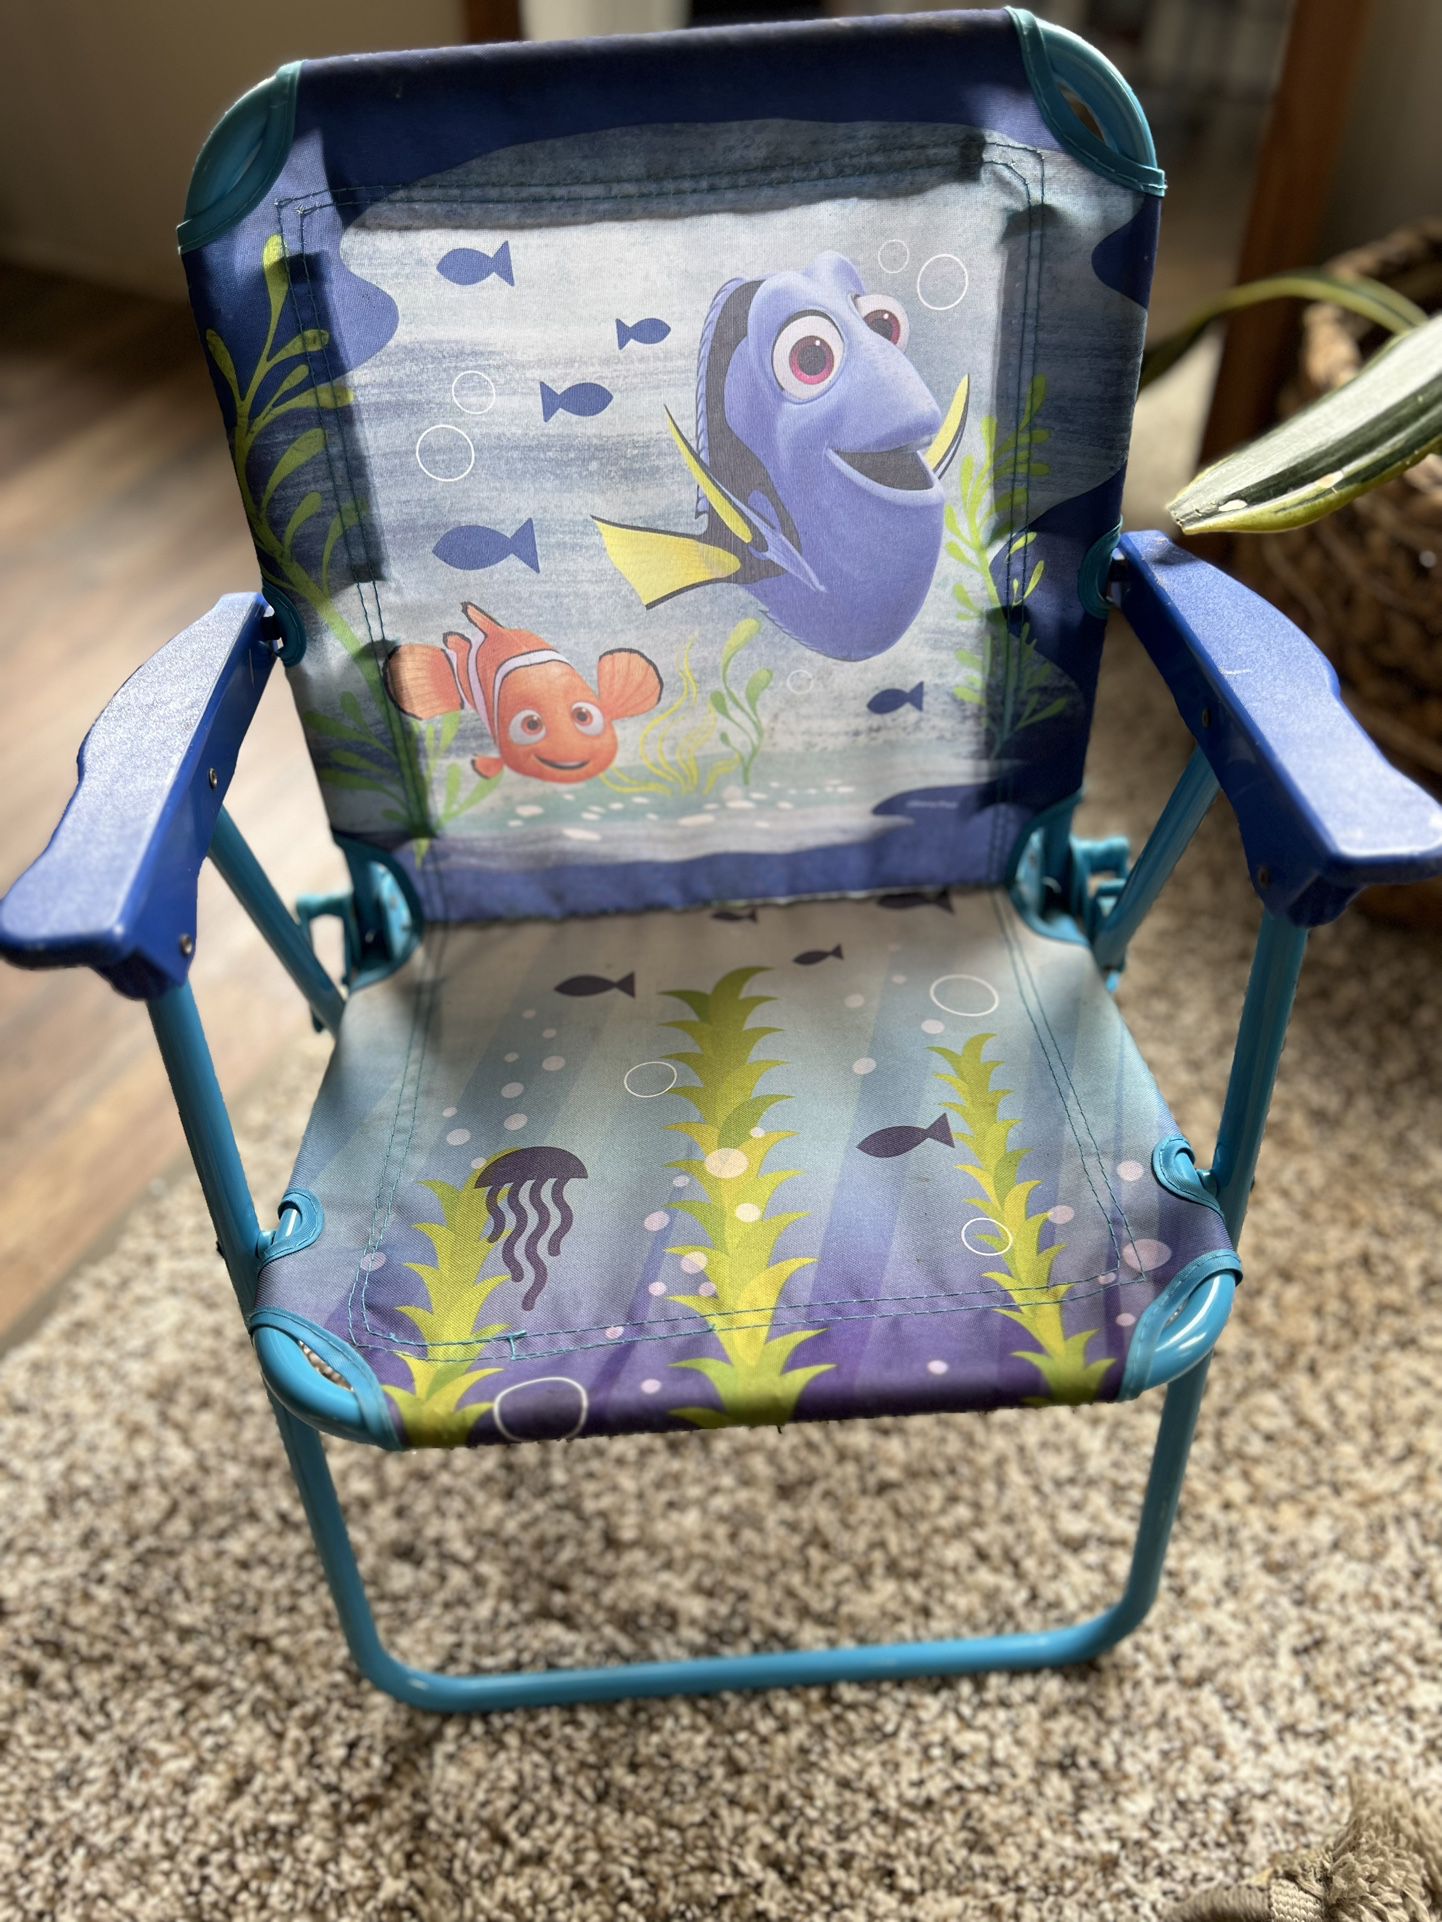 Kids Finding Nemo Beach Chair for Sale in Murrieta, CA - OfferUp